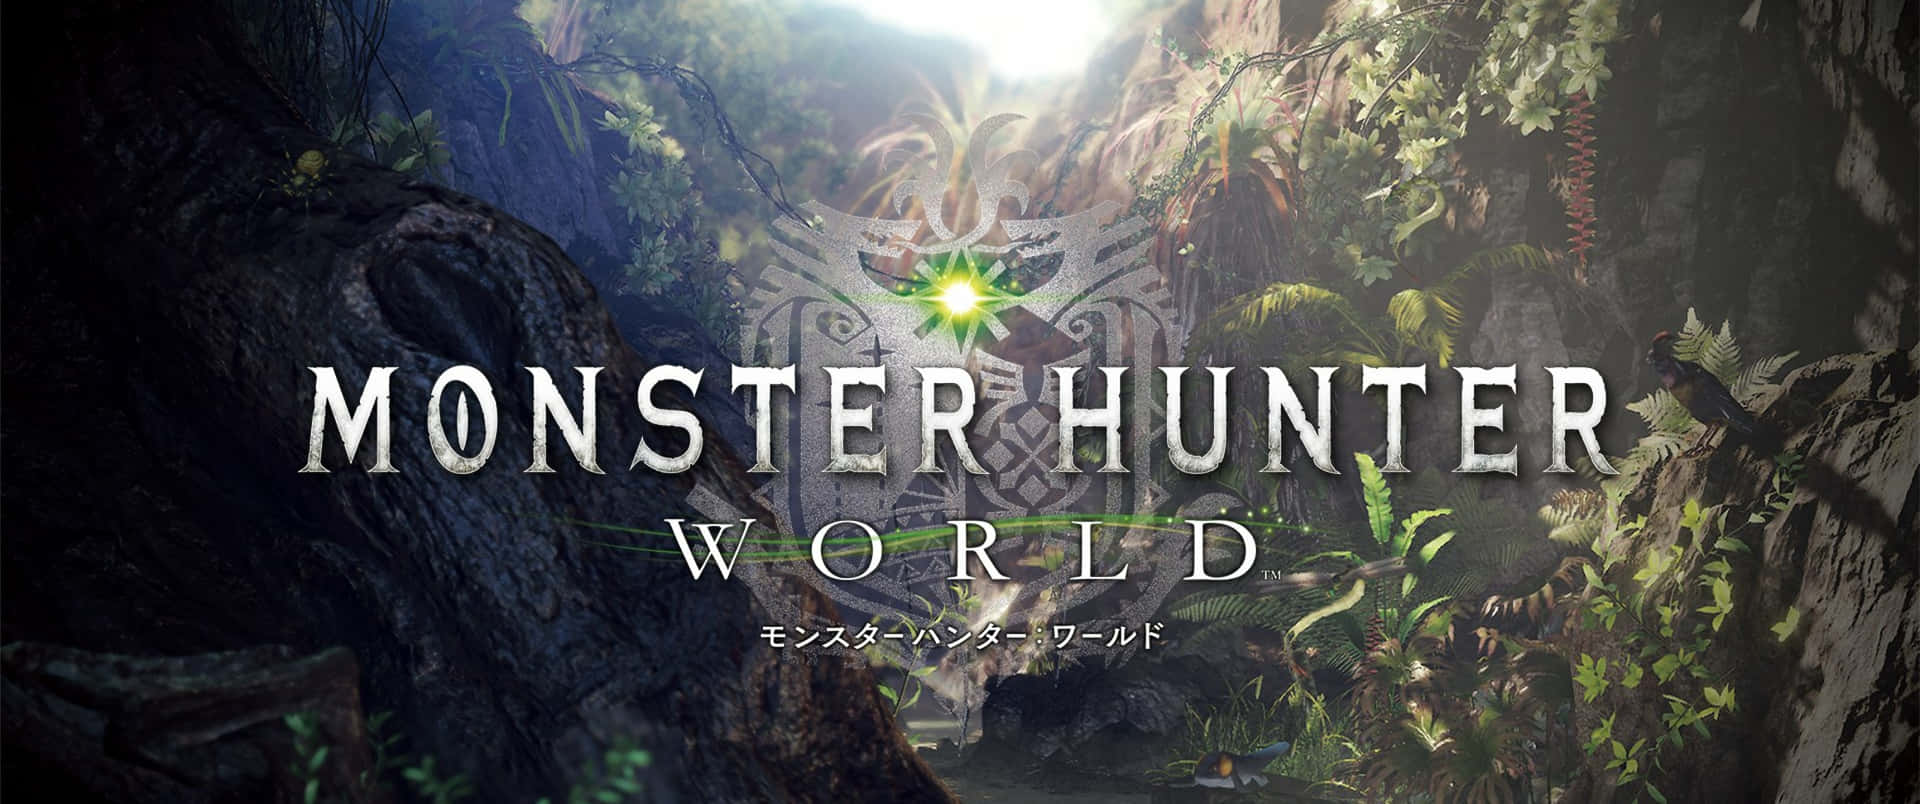 3440x1440p Monster Hunter World Background Game Cover